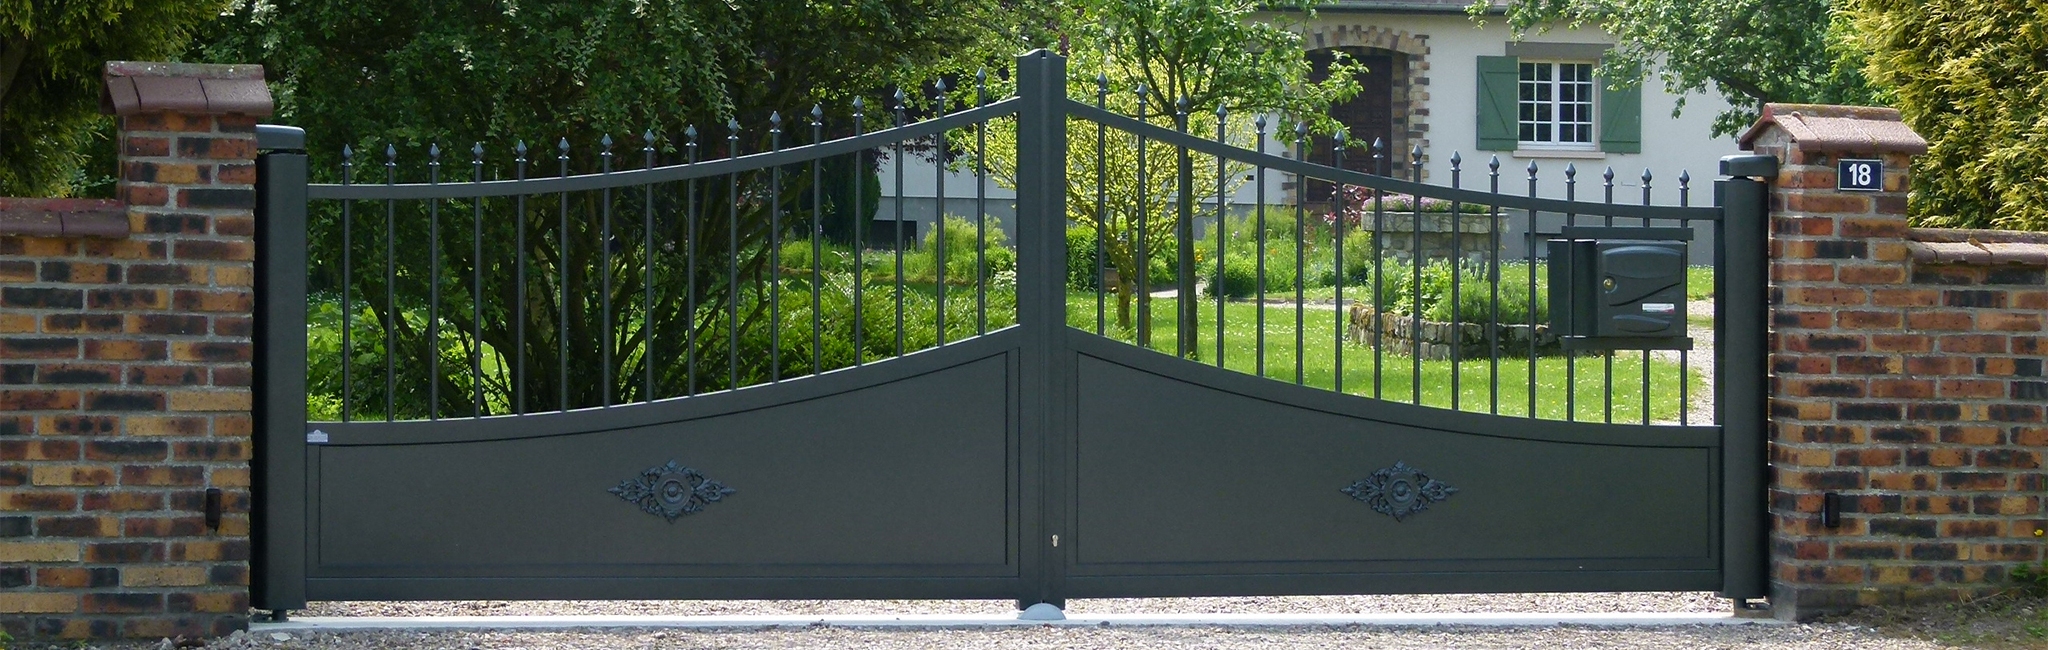 Portail aluminium ou portail en fer : bien choisir